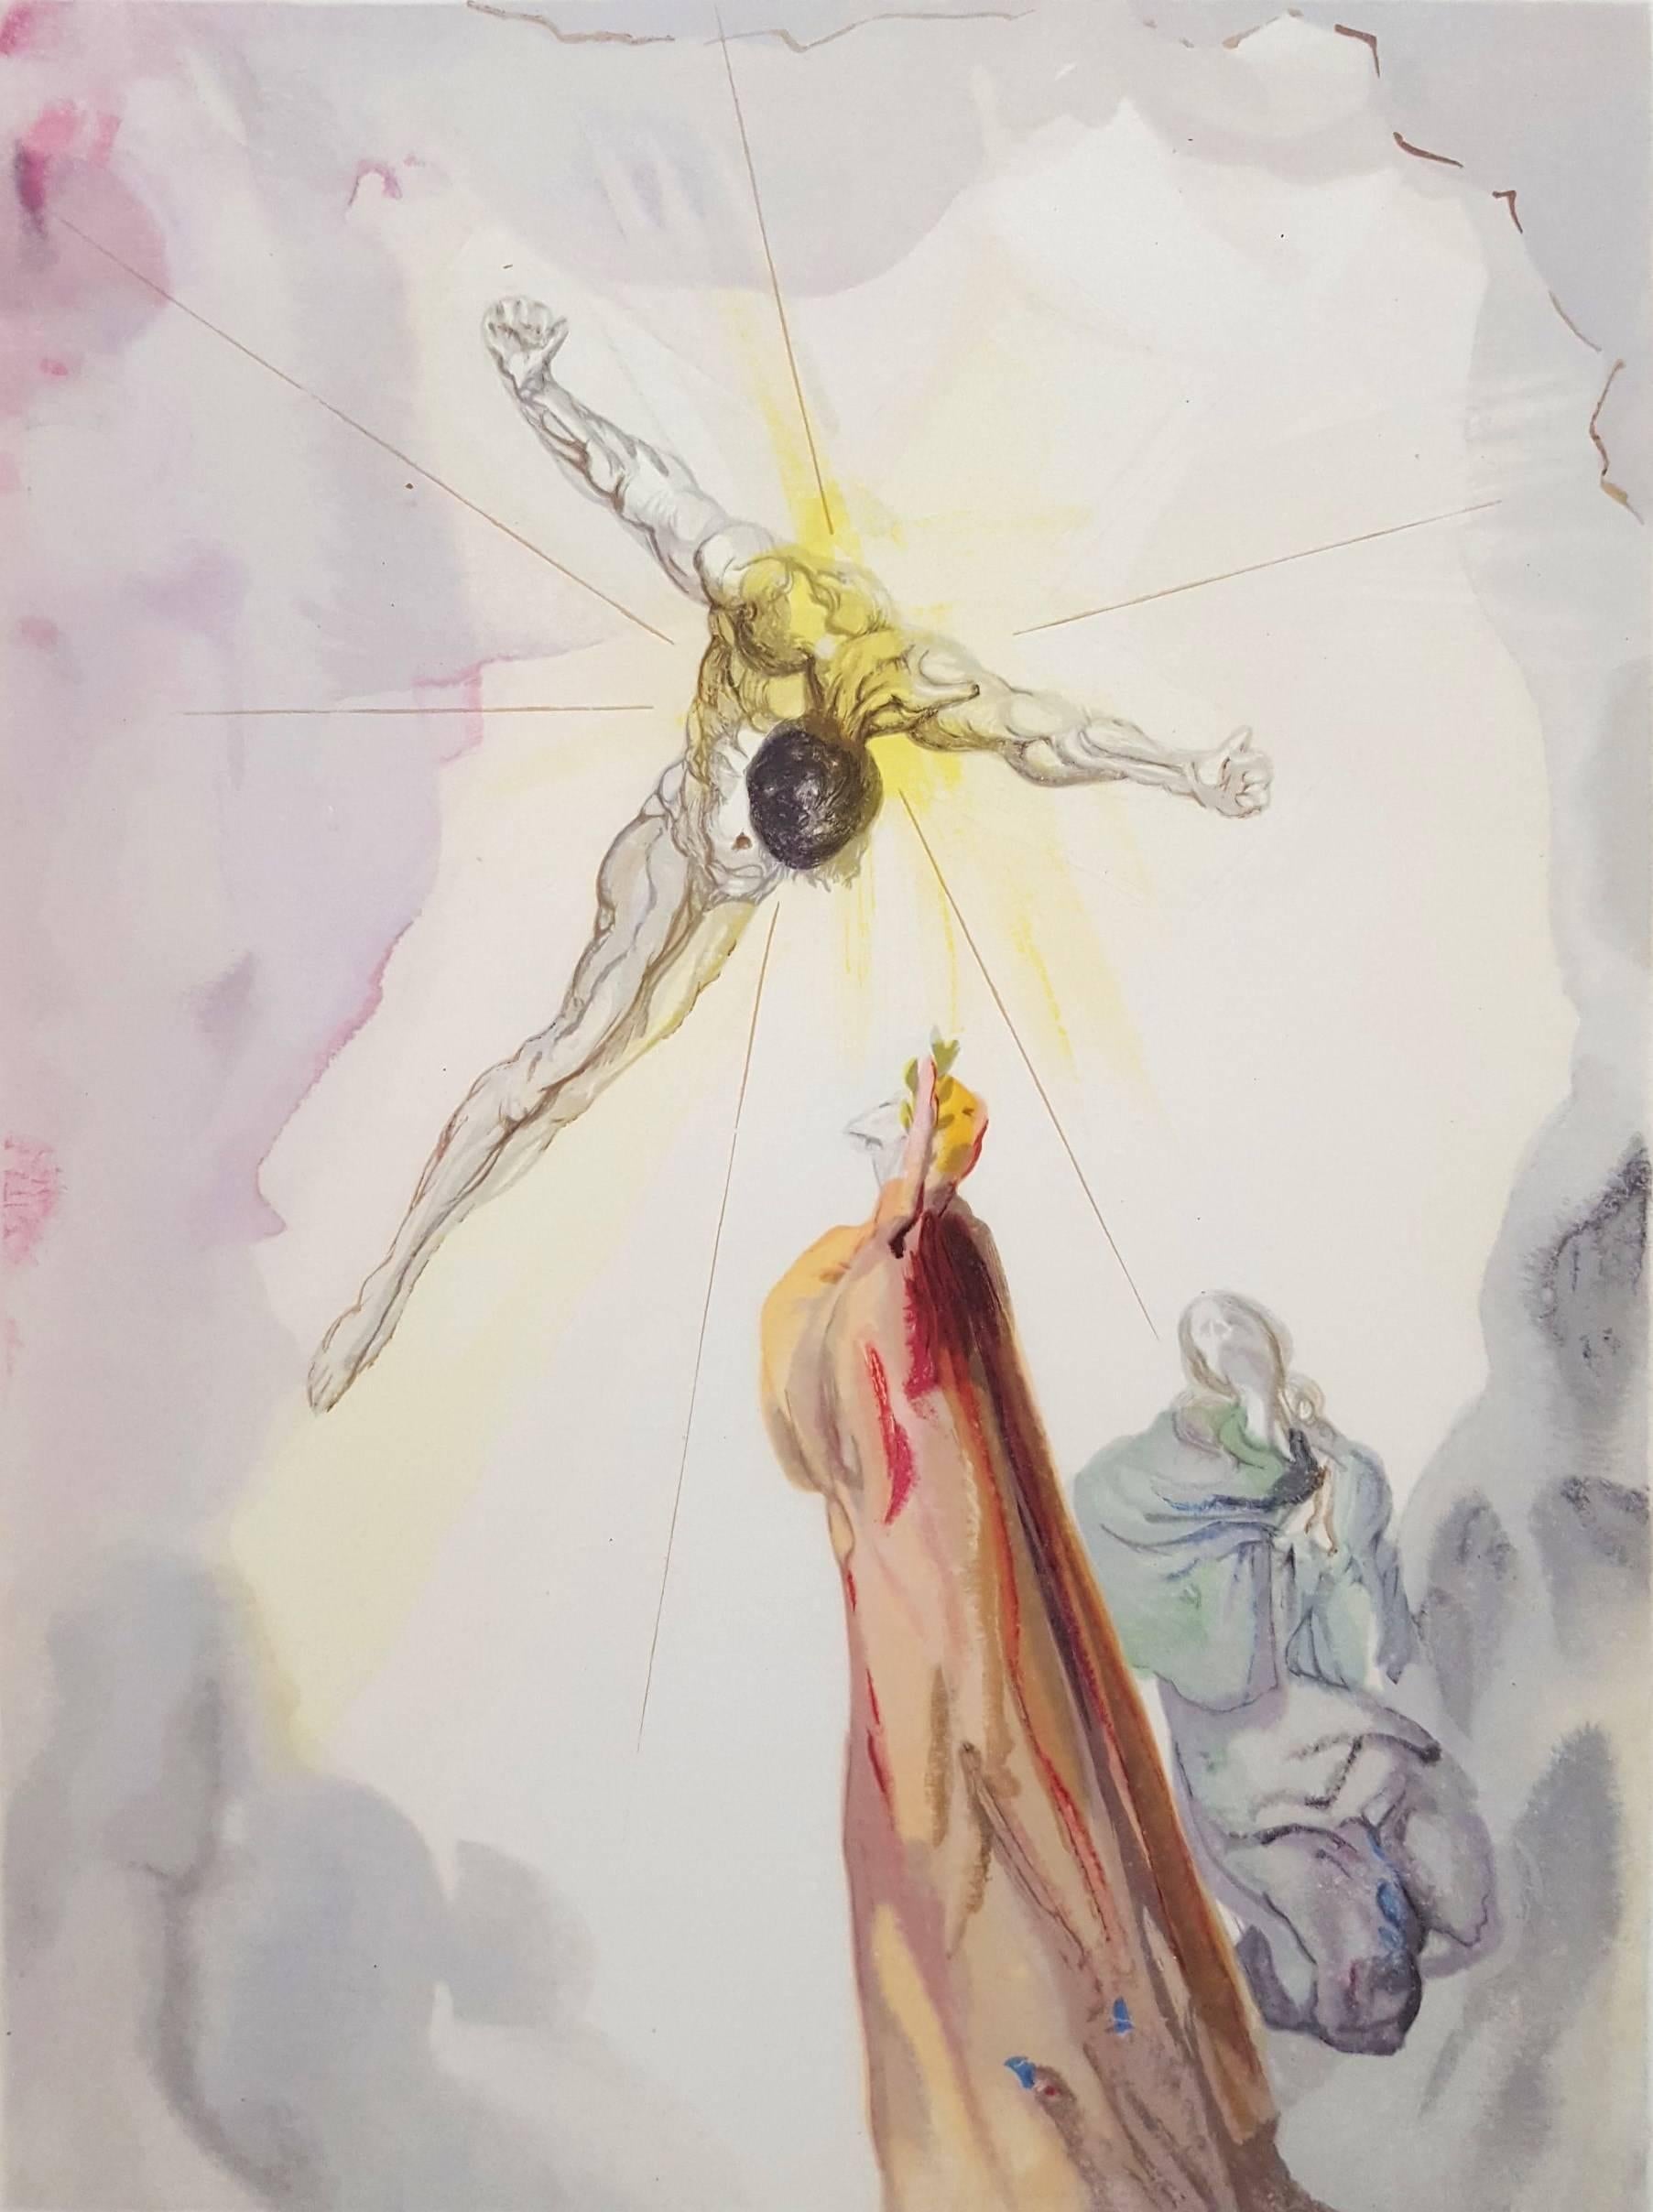 Salvador Dalí Figurative Print - The Apparition of Christ (Heaven Canto 13) (A.F.195.13)